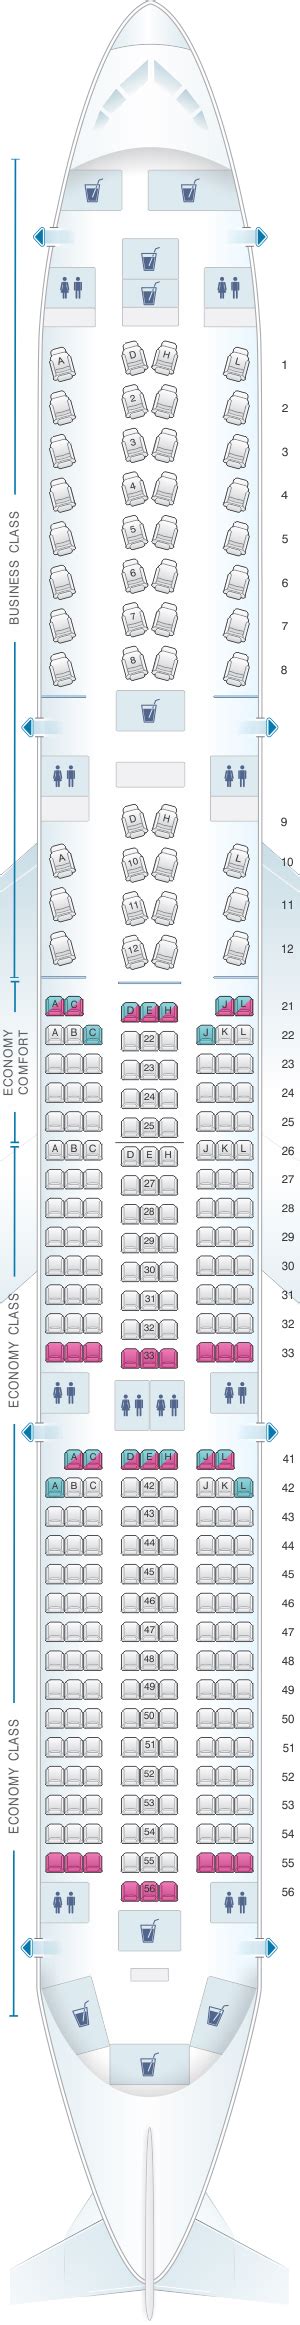 Seat Map Finnair Airbus A350 900 Config1 Airplane Seats Best Airplane